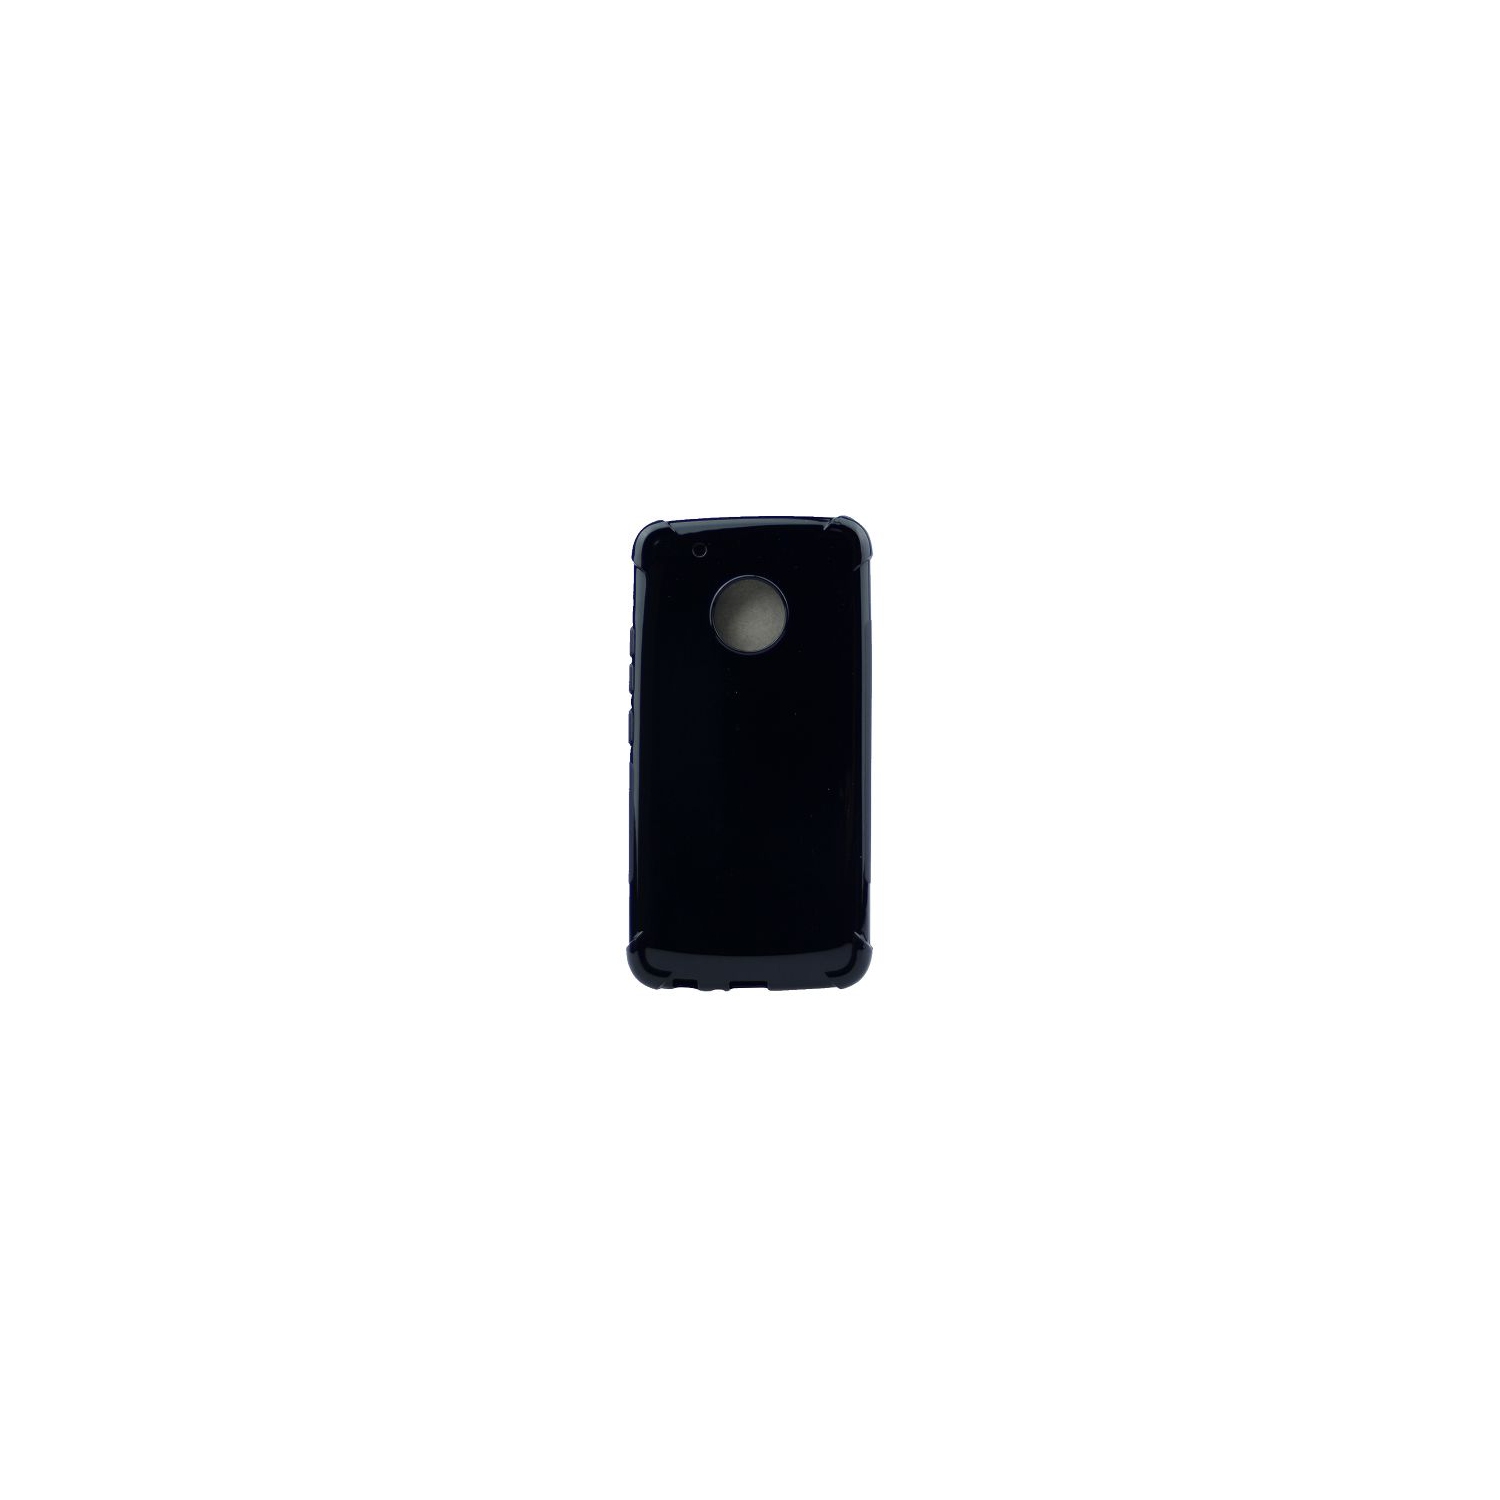 TopSave Extra Corner Bumper Soft TPU Jelly Case For Moto G5 Plus, Black